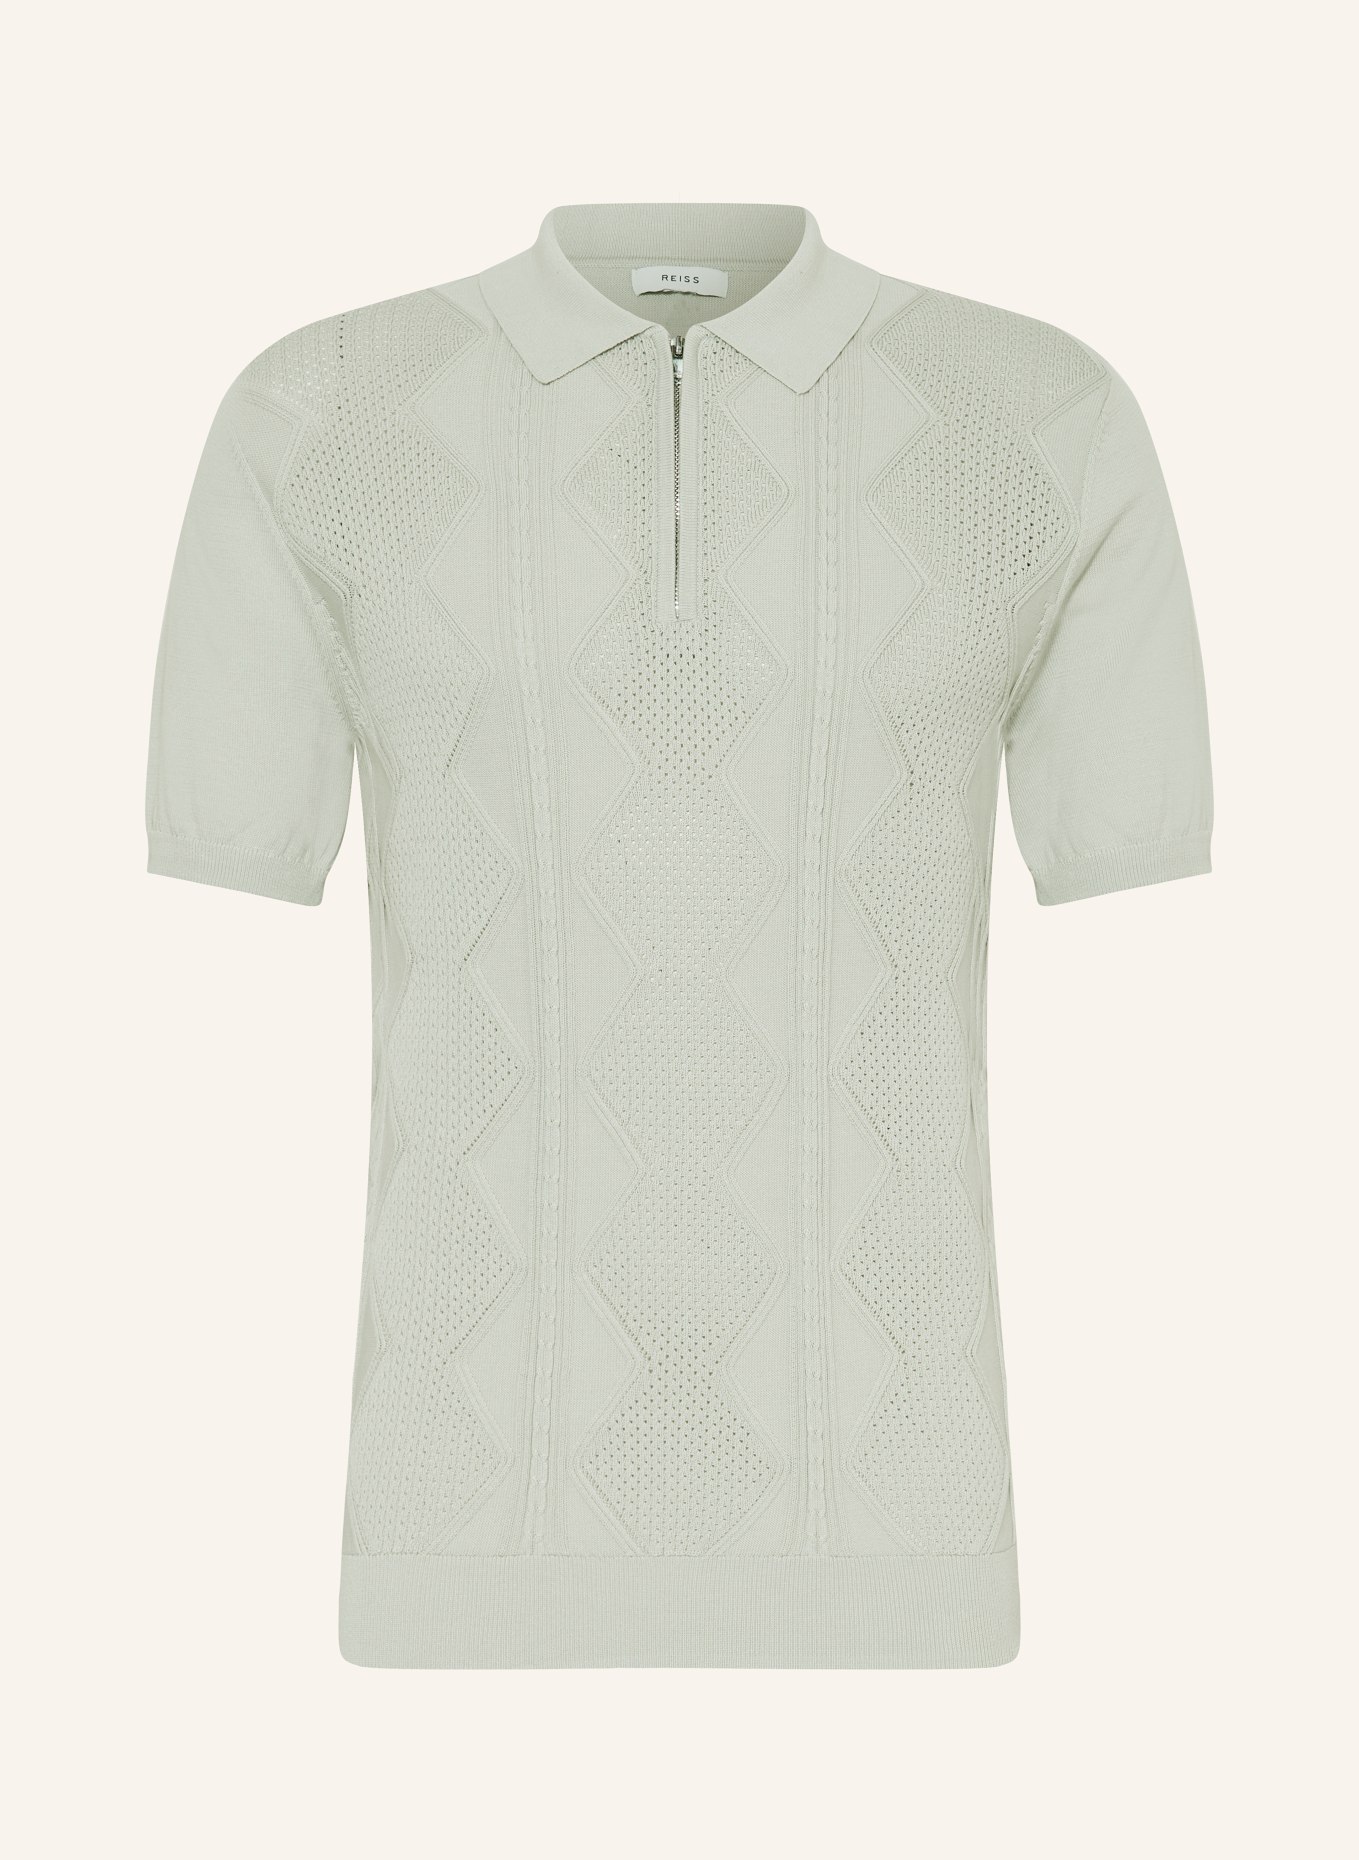 REISS Strick-Poloshirt TROPIC, Farbe: MINT (Bild 1)